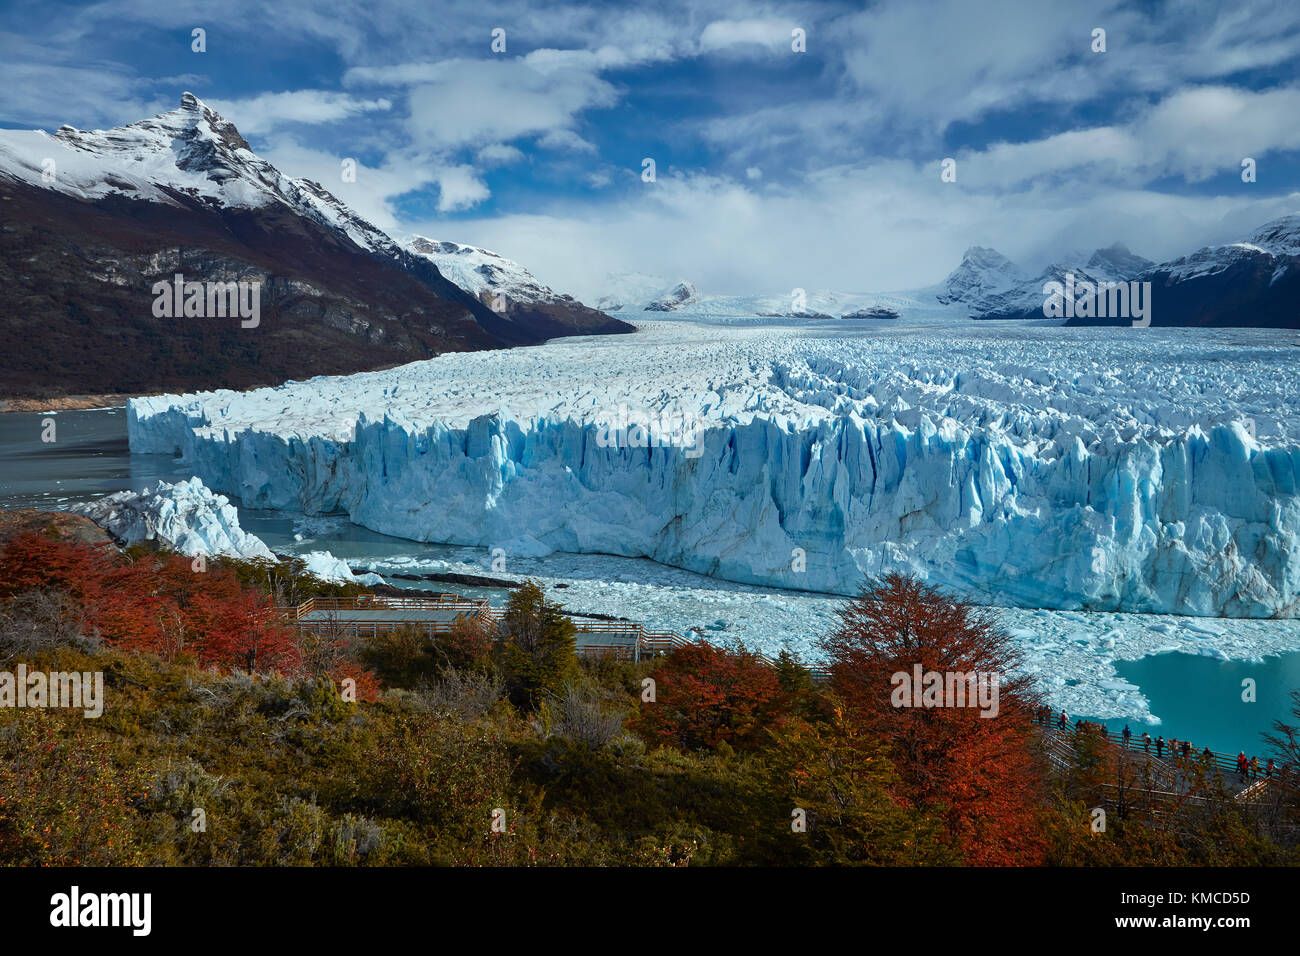 Perito Moreno Glacier, lenga arbres en automne, et les touristes en promenade, Parque Nacional Los Glaciares (zone du patrimoine mondial), Patagonie, Argentine, sout Banque D'Images